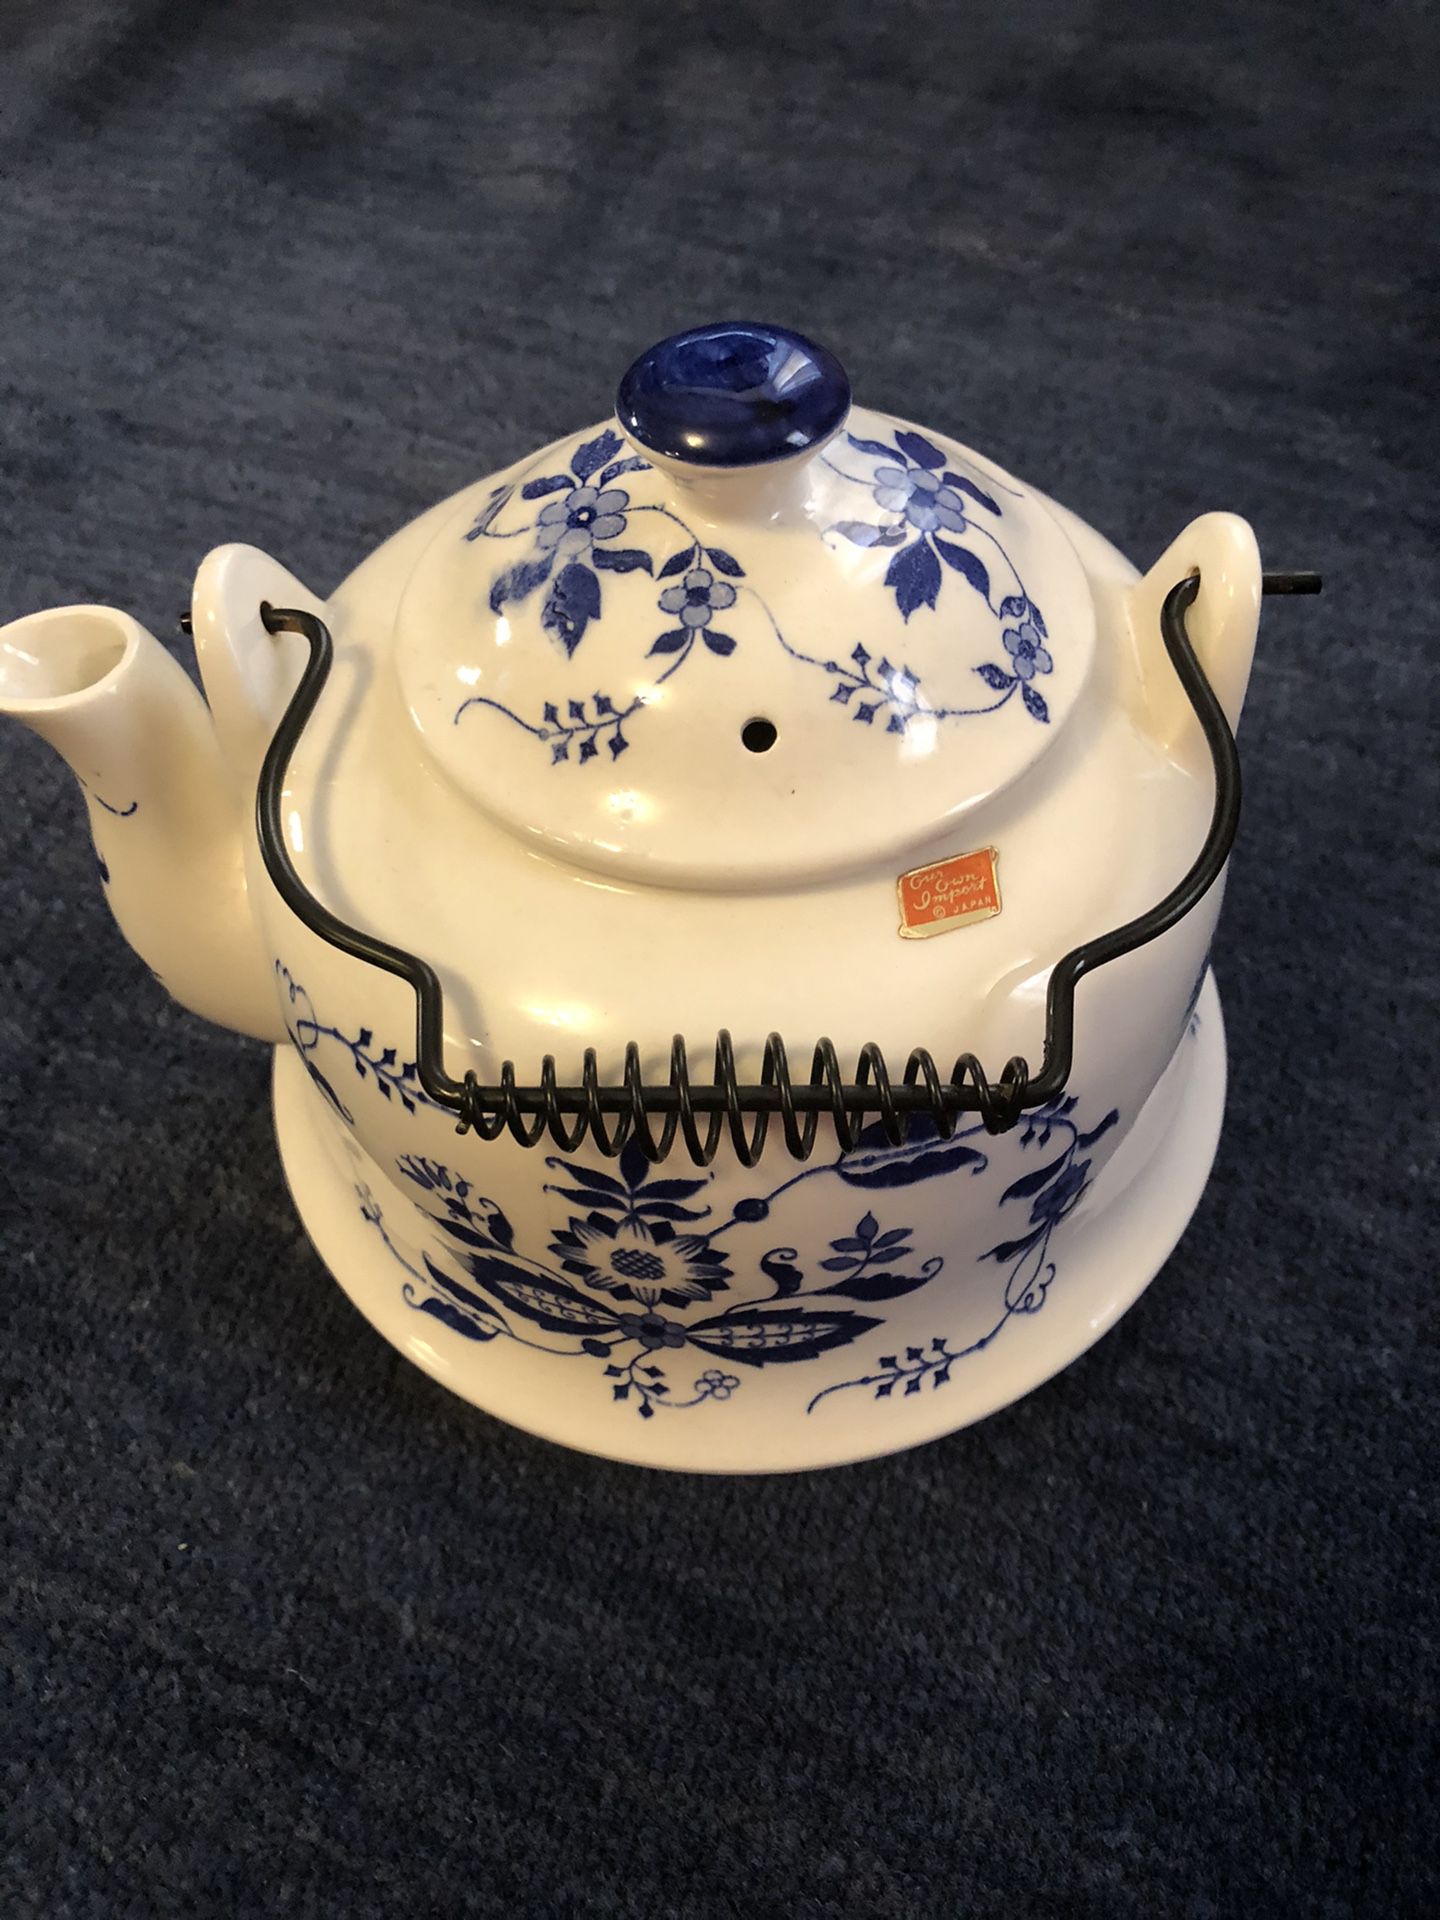 Vintage blue and white enamelware teapot